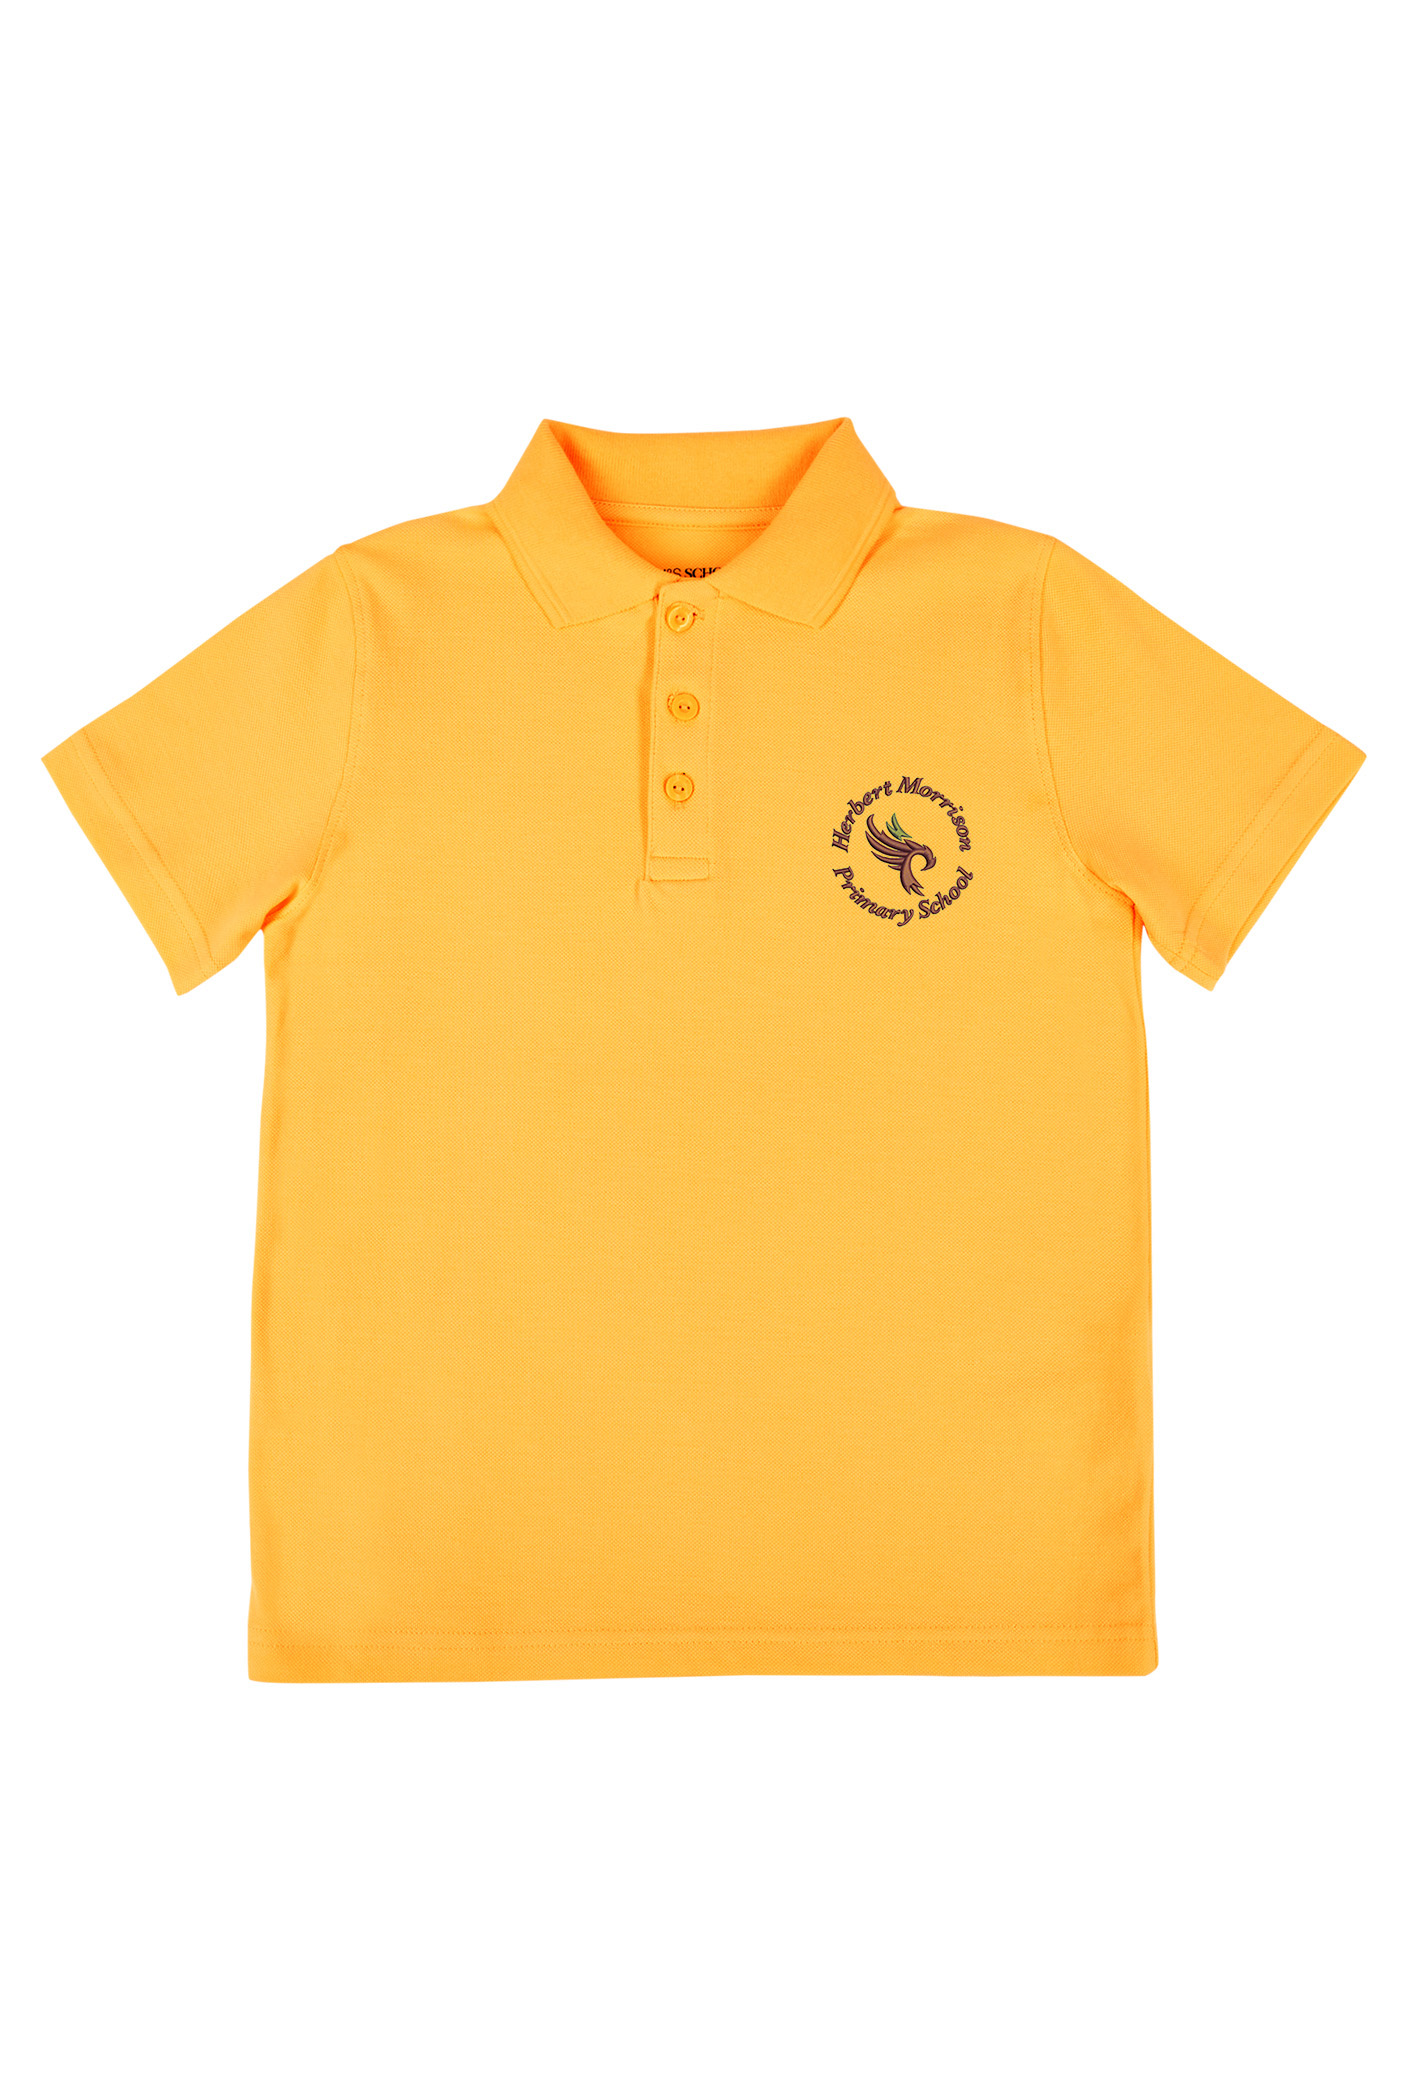 Herbert Morrison Unisex S/S Cotton Polo Shirt - PE ONLY